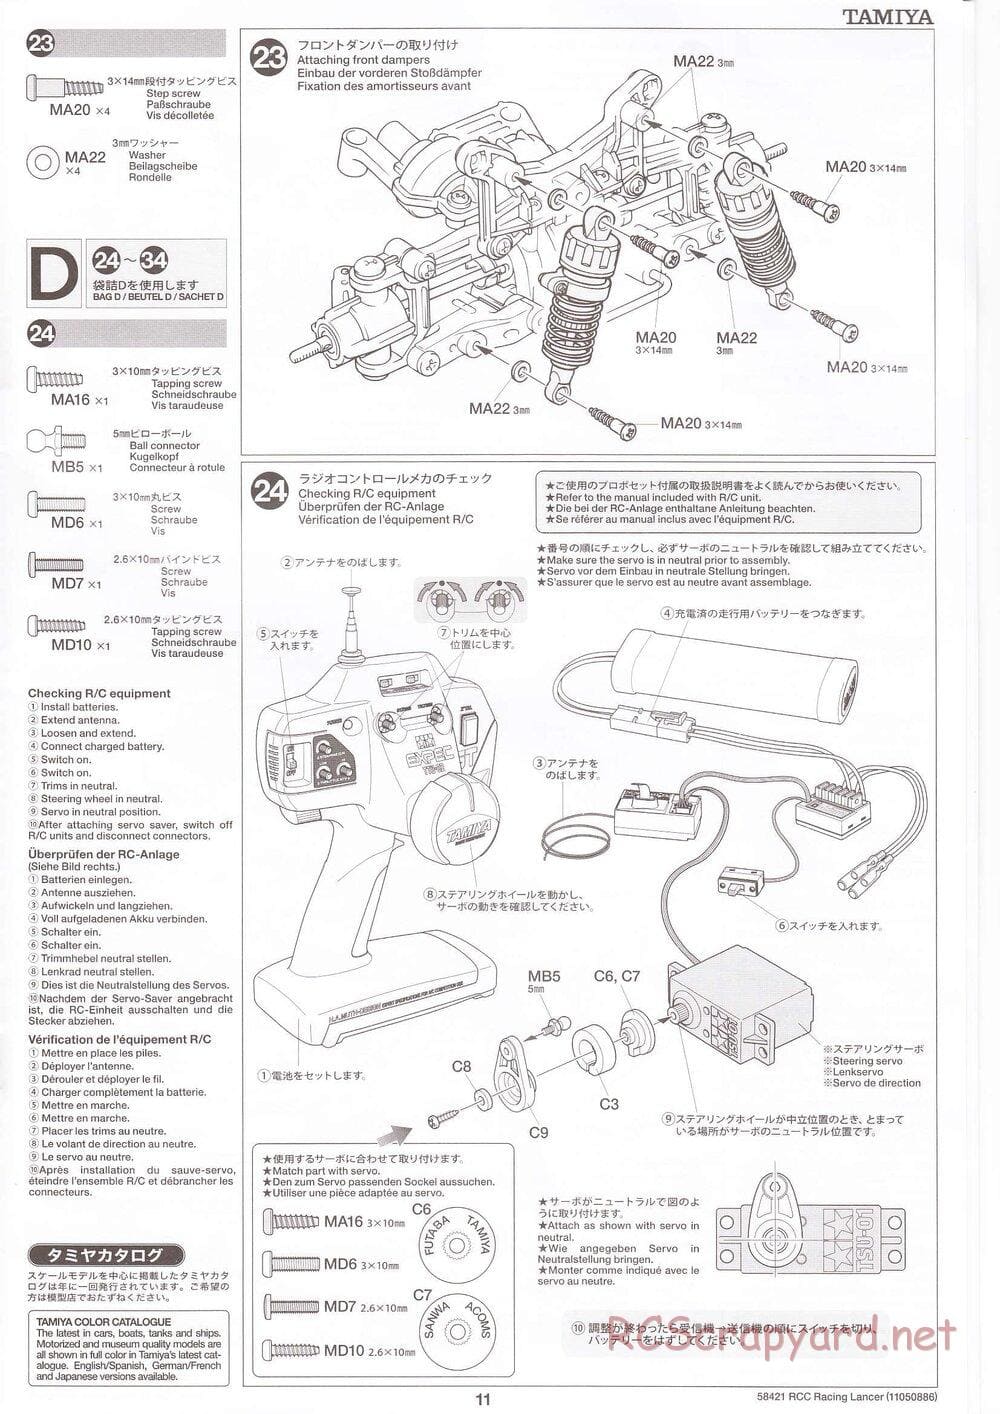 Tamiya - Mitsubishi Racing Lancer - DF-01 Chassis - Manual - Page 11